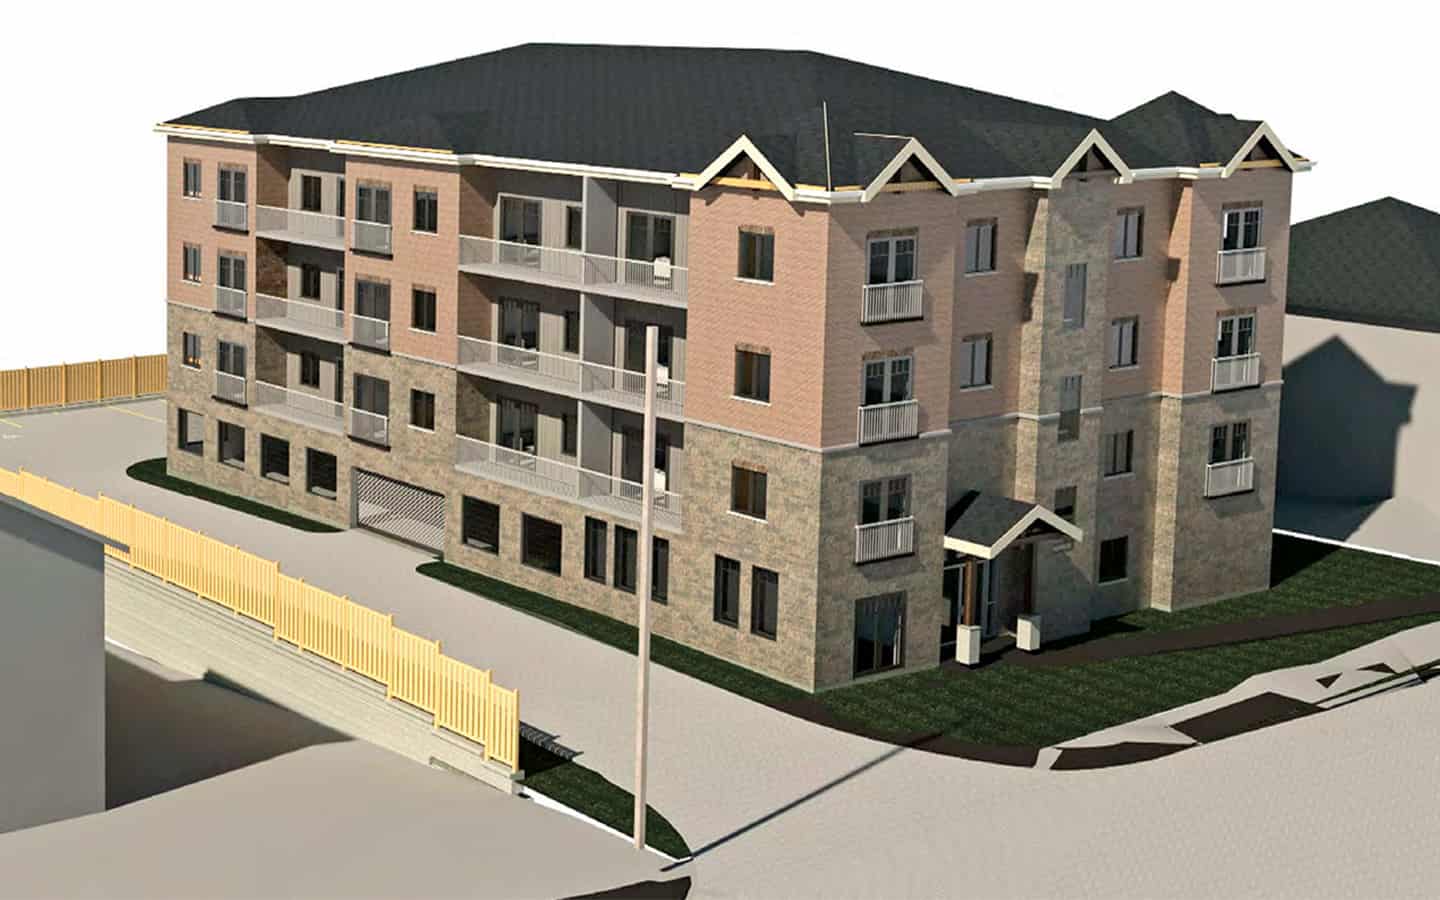 Neighbours want no part of Elmira apartment complex